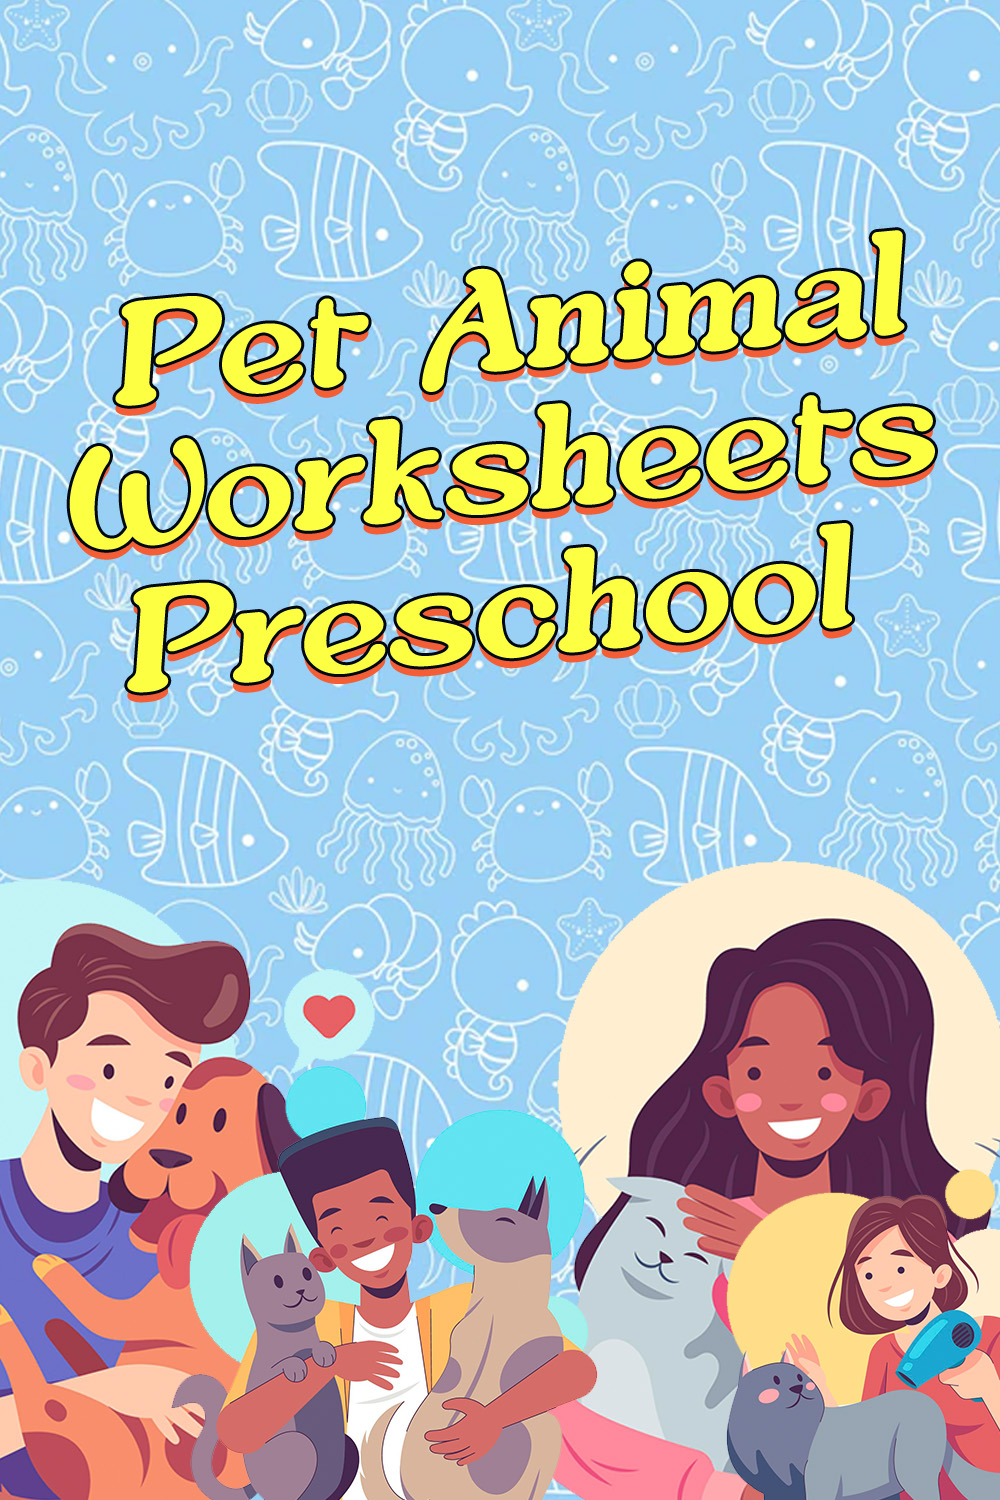 14 Images of Pet Animal Worksheets Preschool